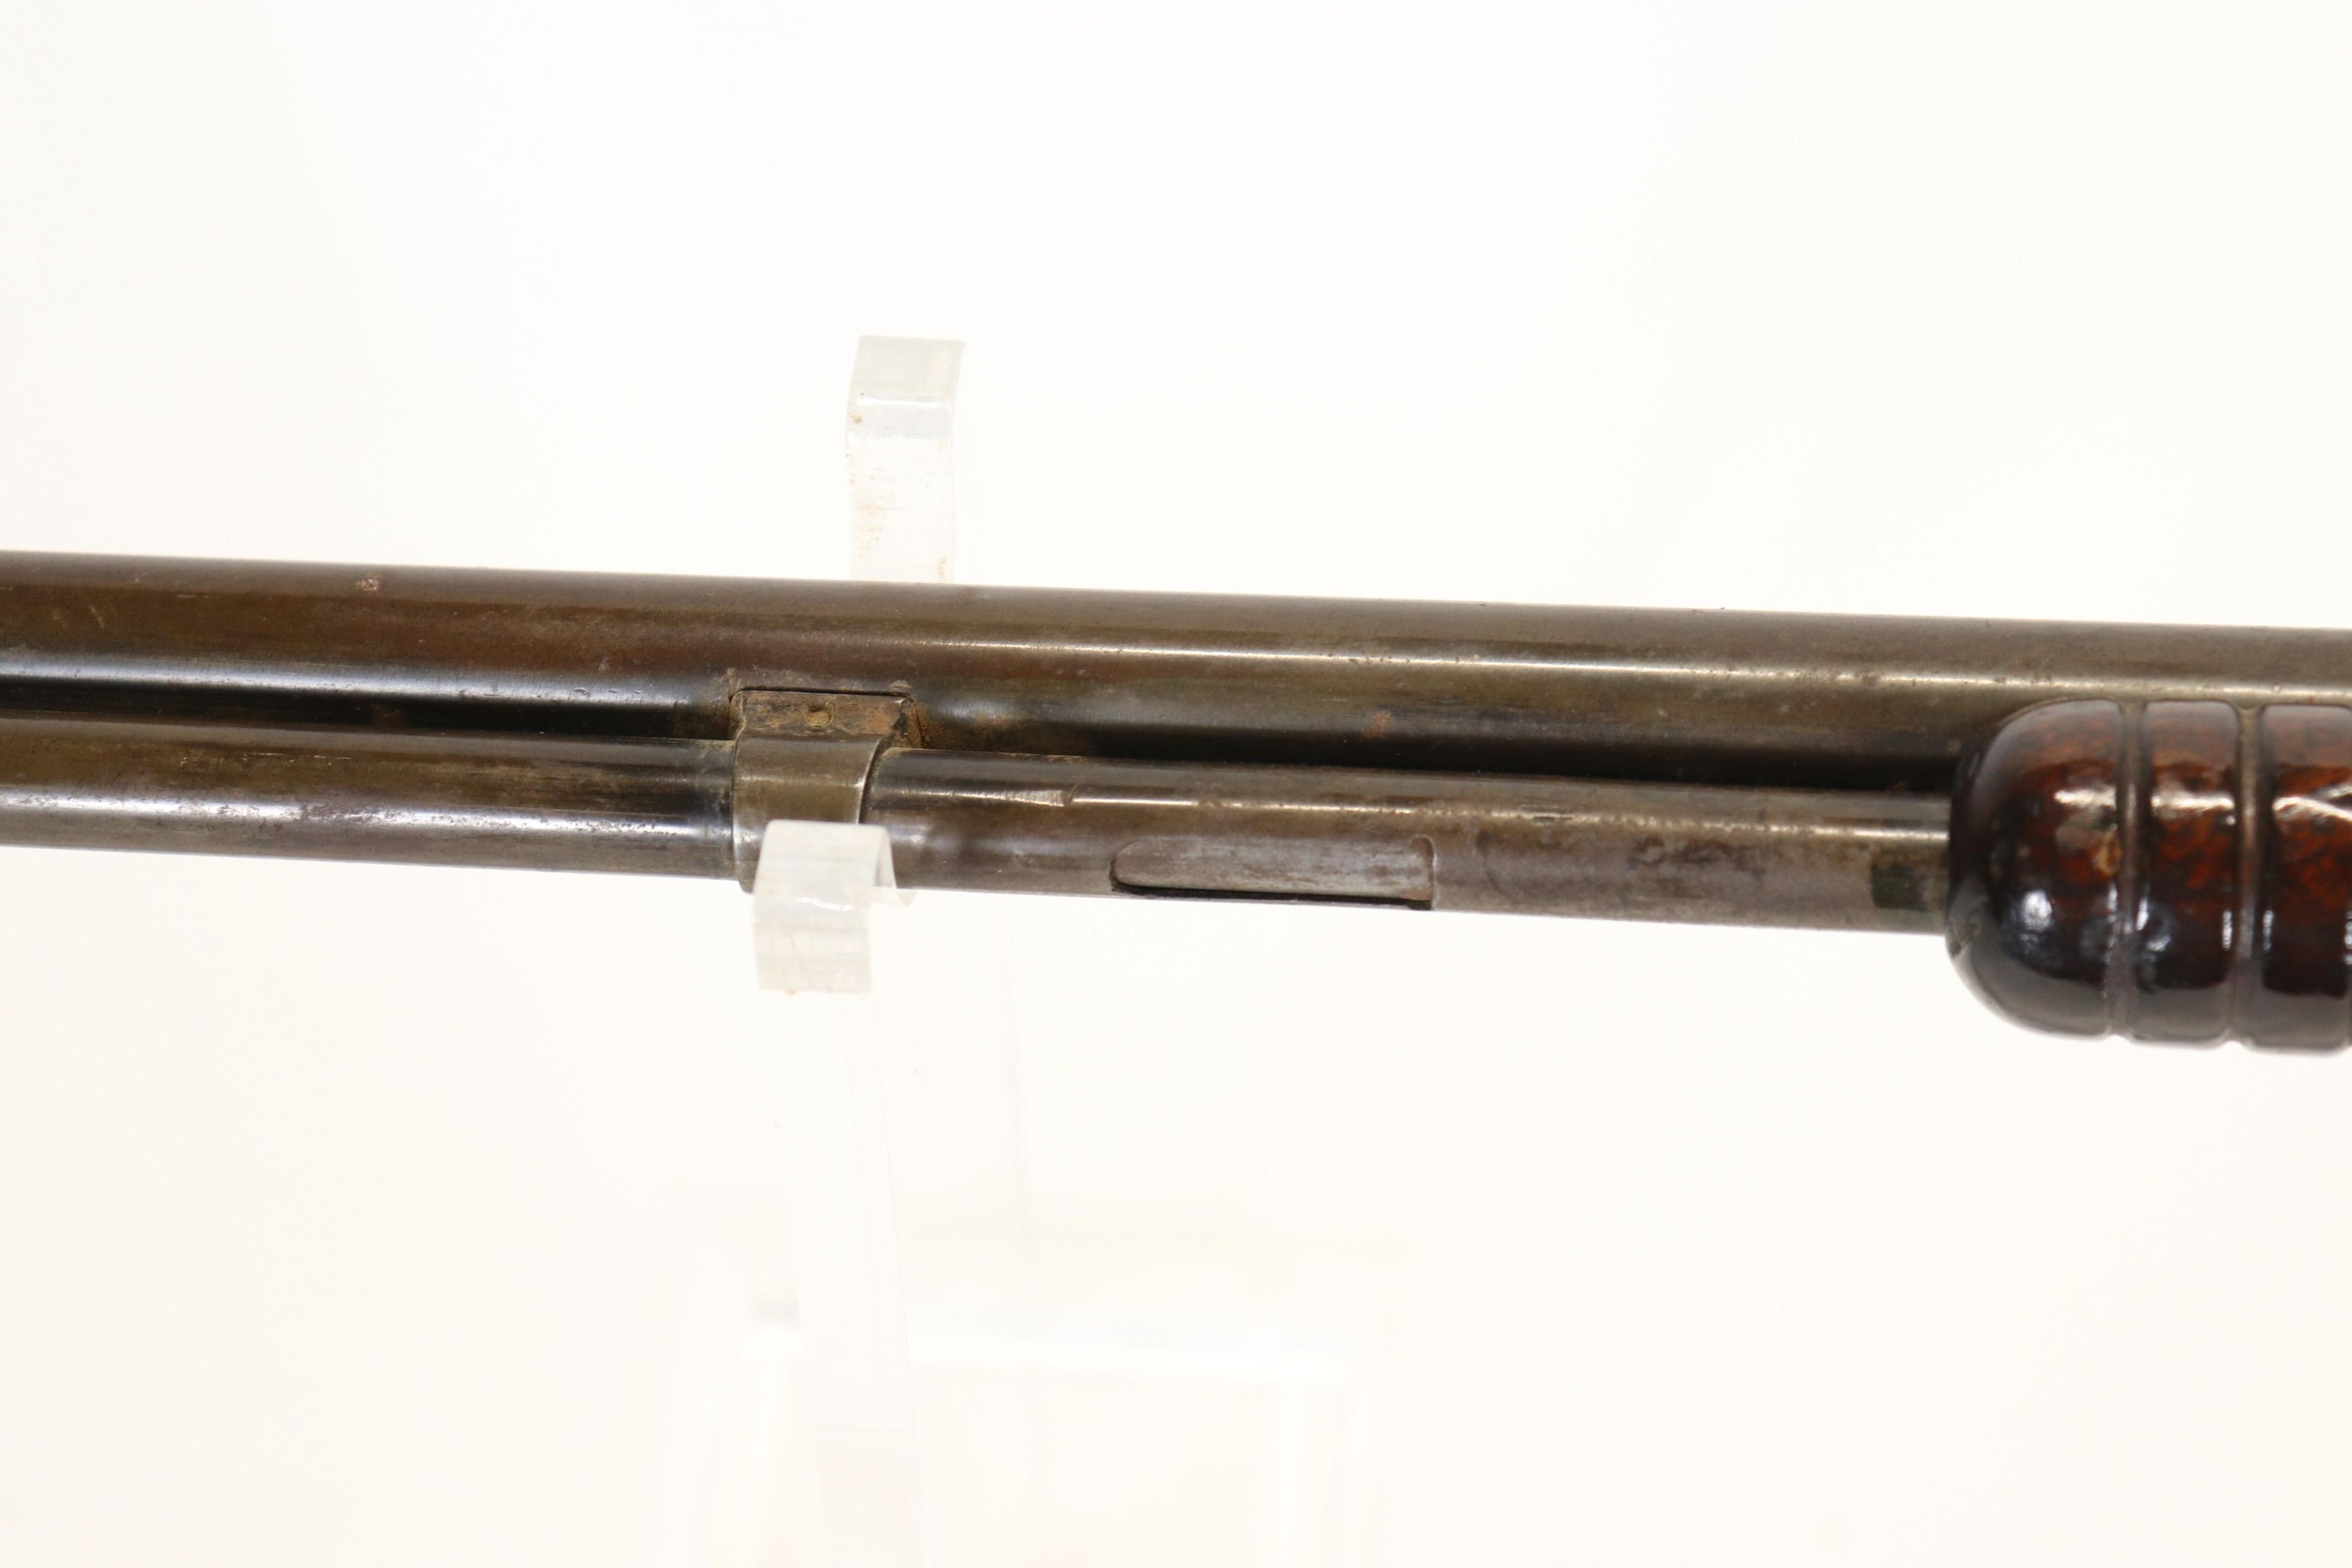 Winchester 62A .22 S-L-LR  SN:216299